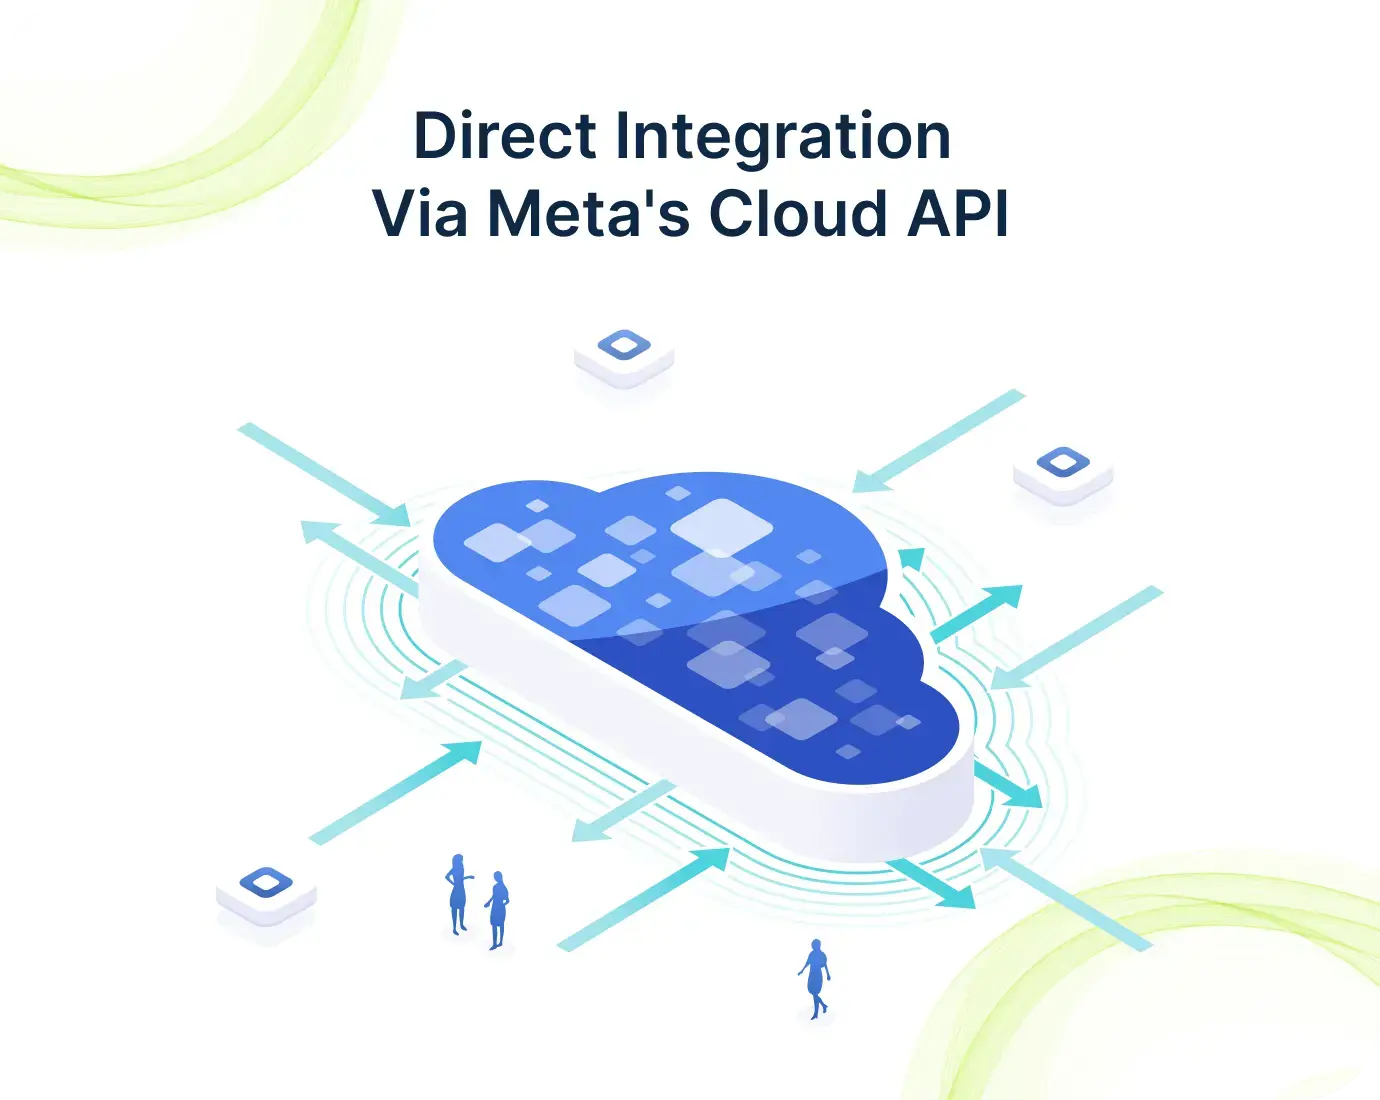 Direct Integration via Meta's Cloud API